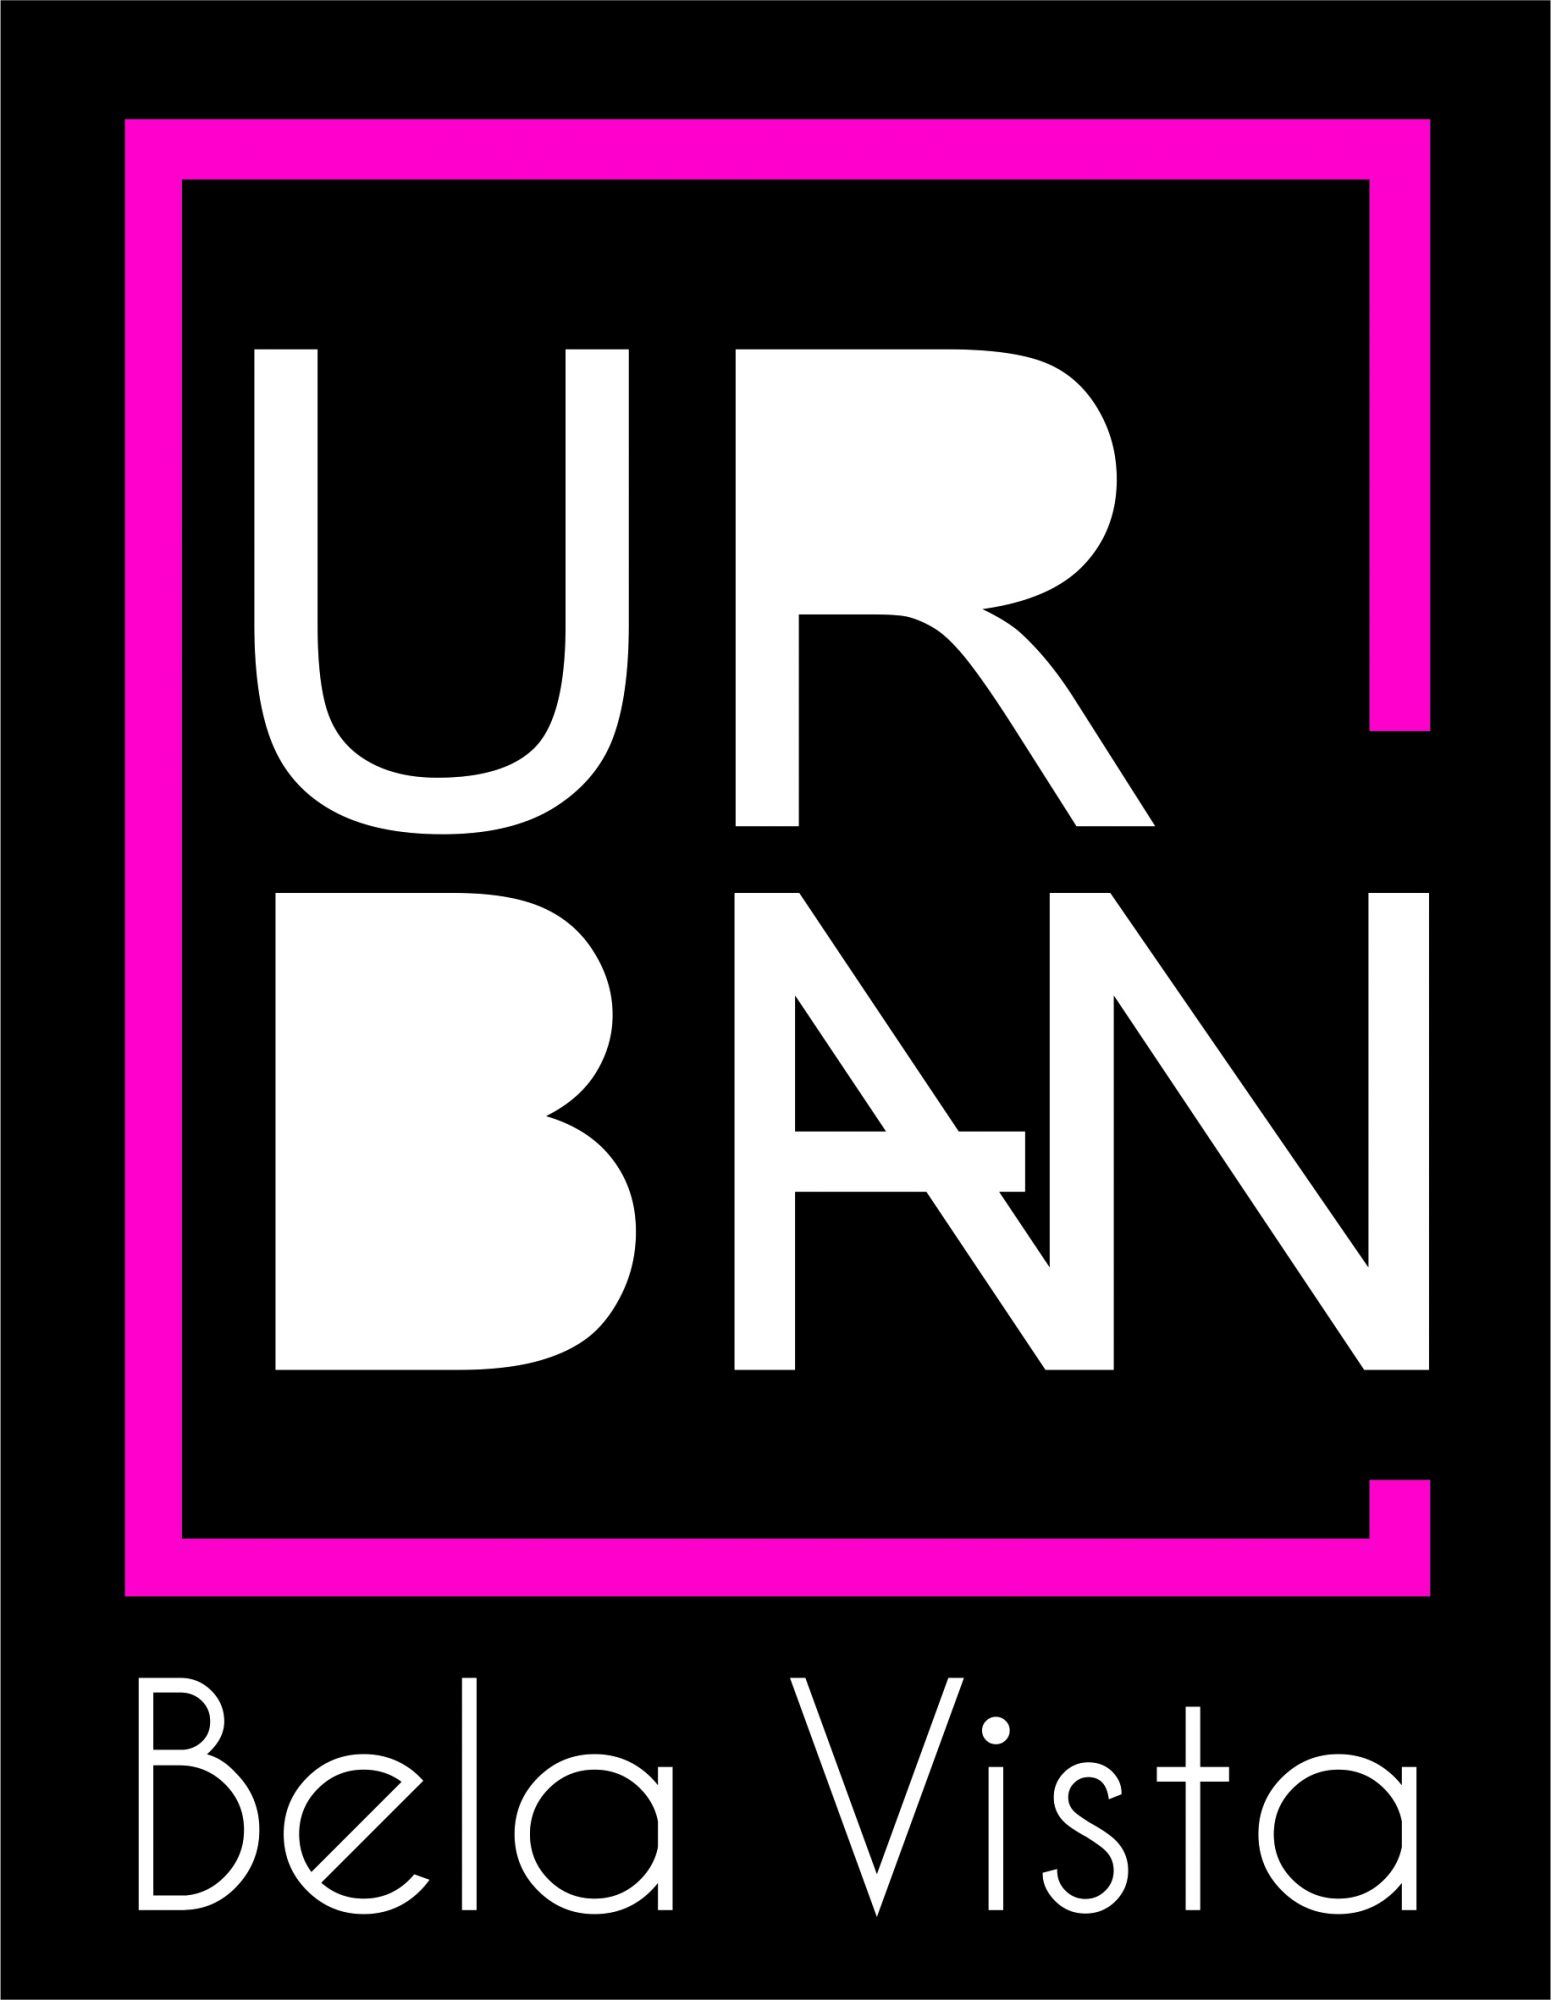 Logo do empreendimento Urban Bela Vista da construtora Ekko Group